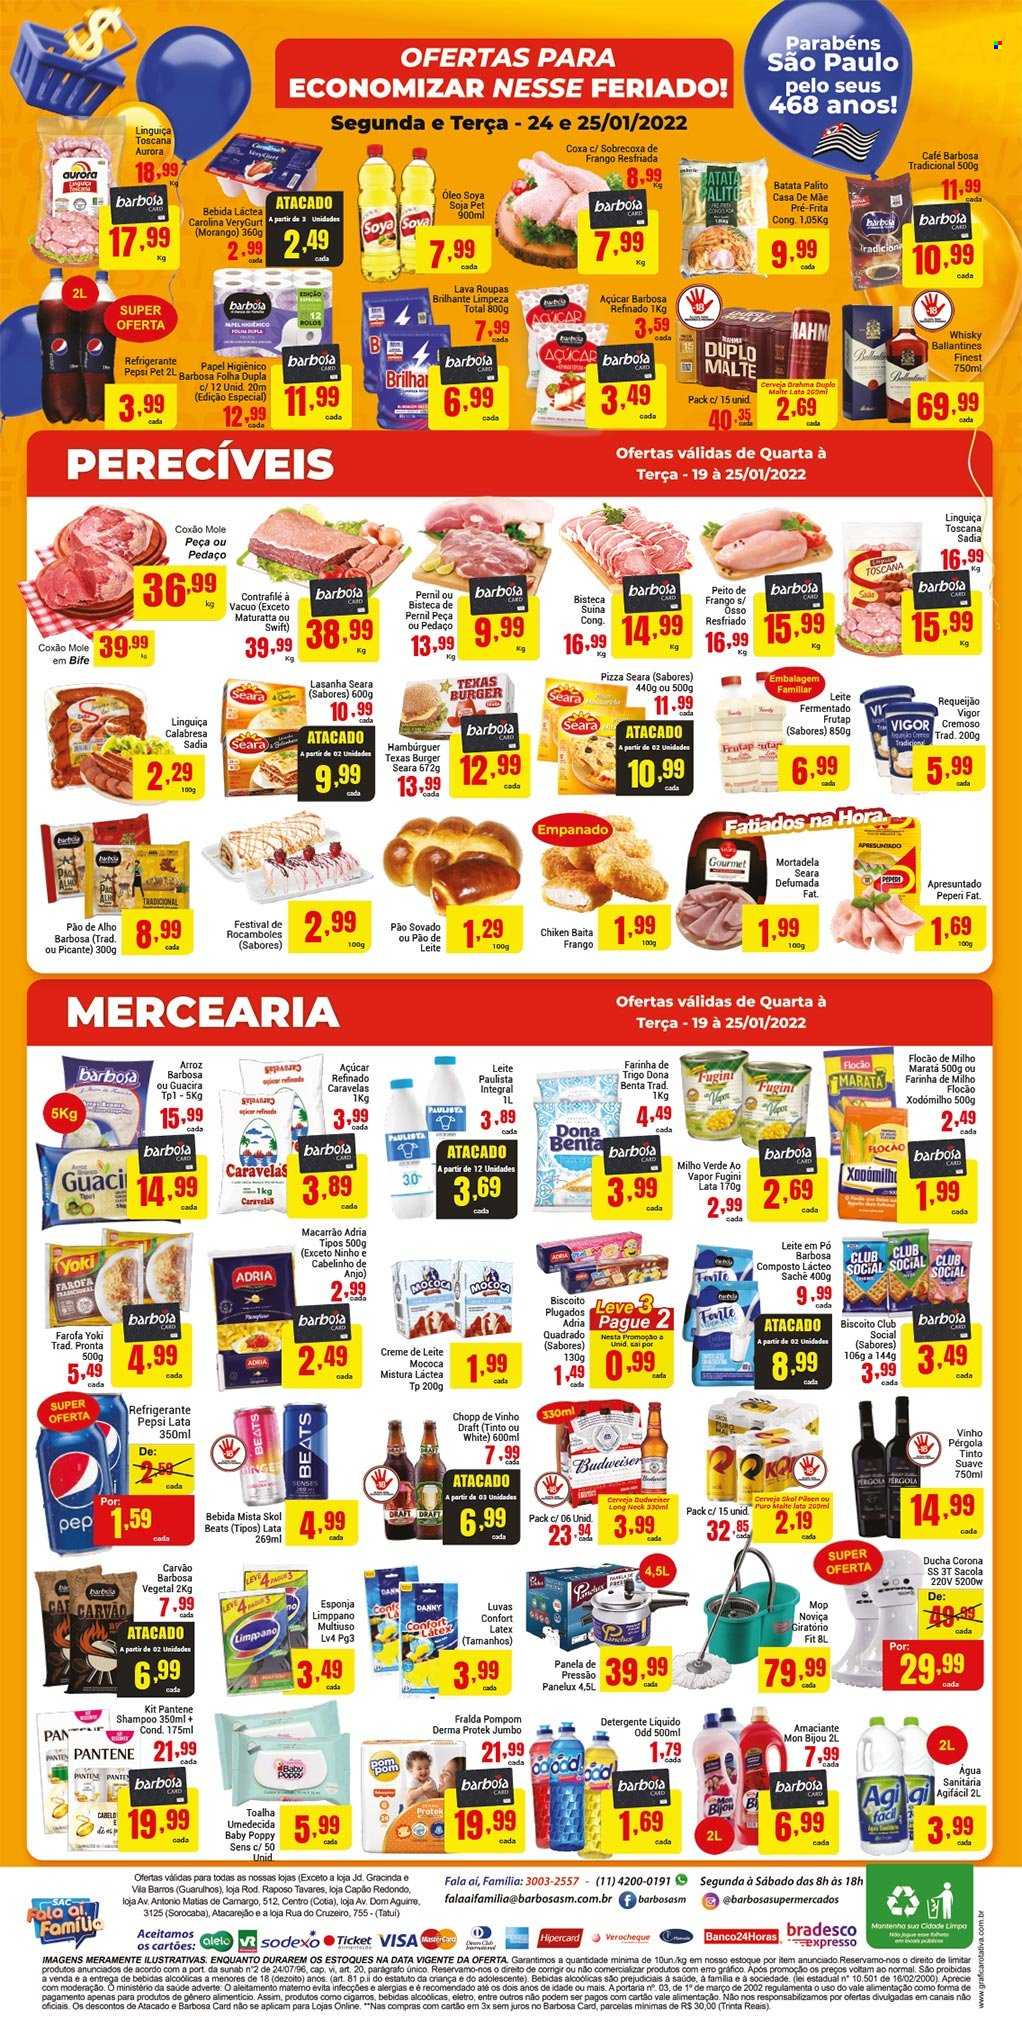 Encarte Barbosa Supermercados  - 19.01.2022 - 25.01.2022.